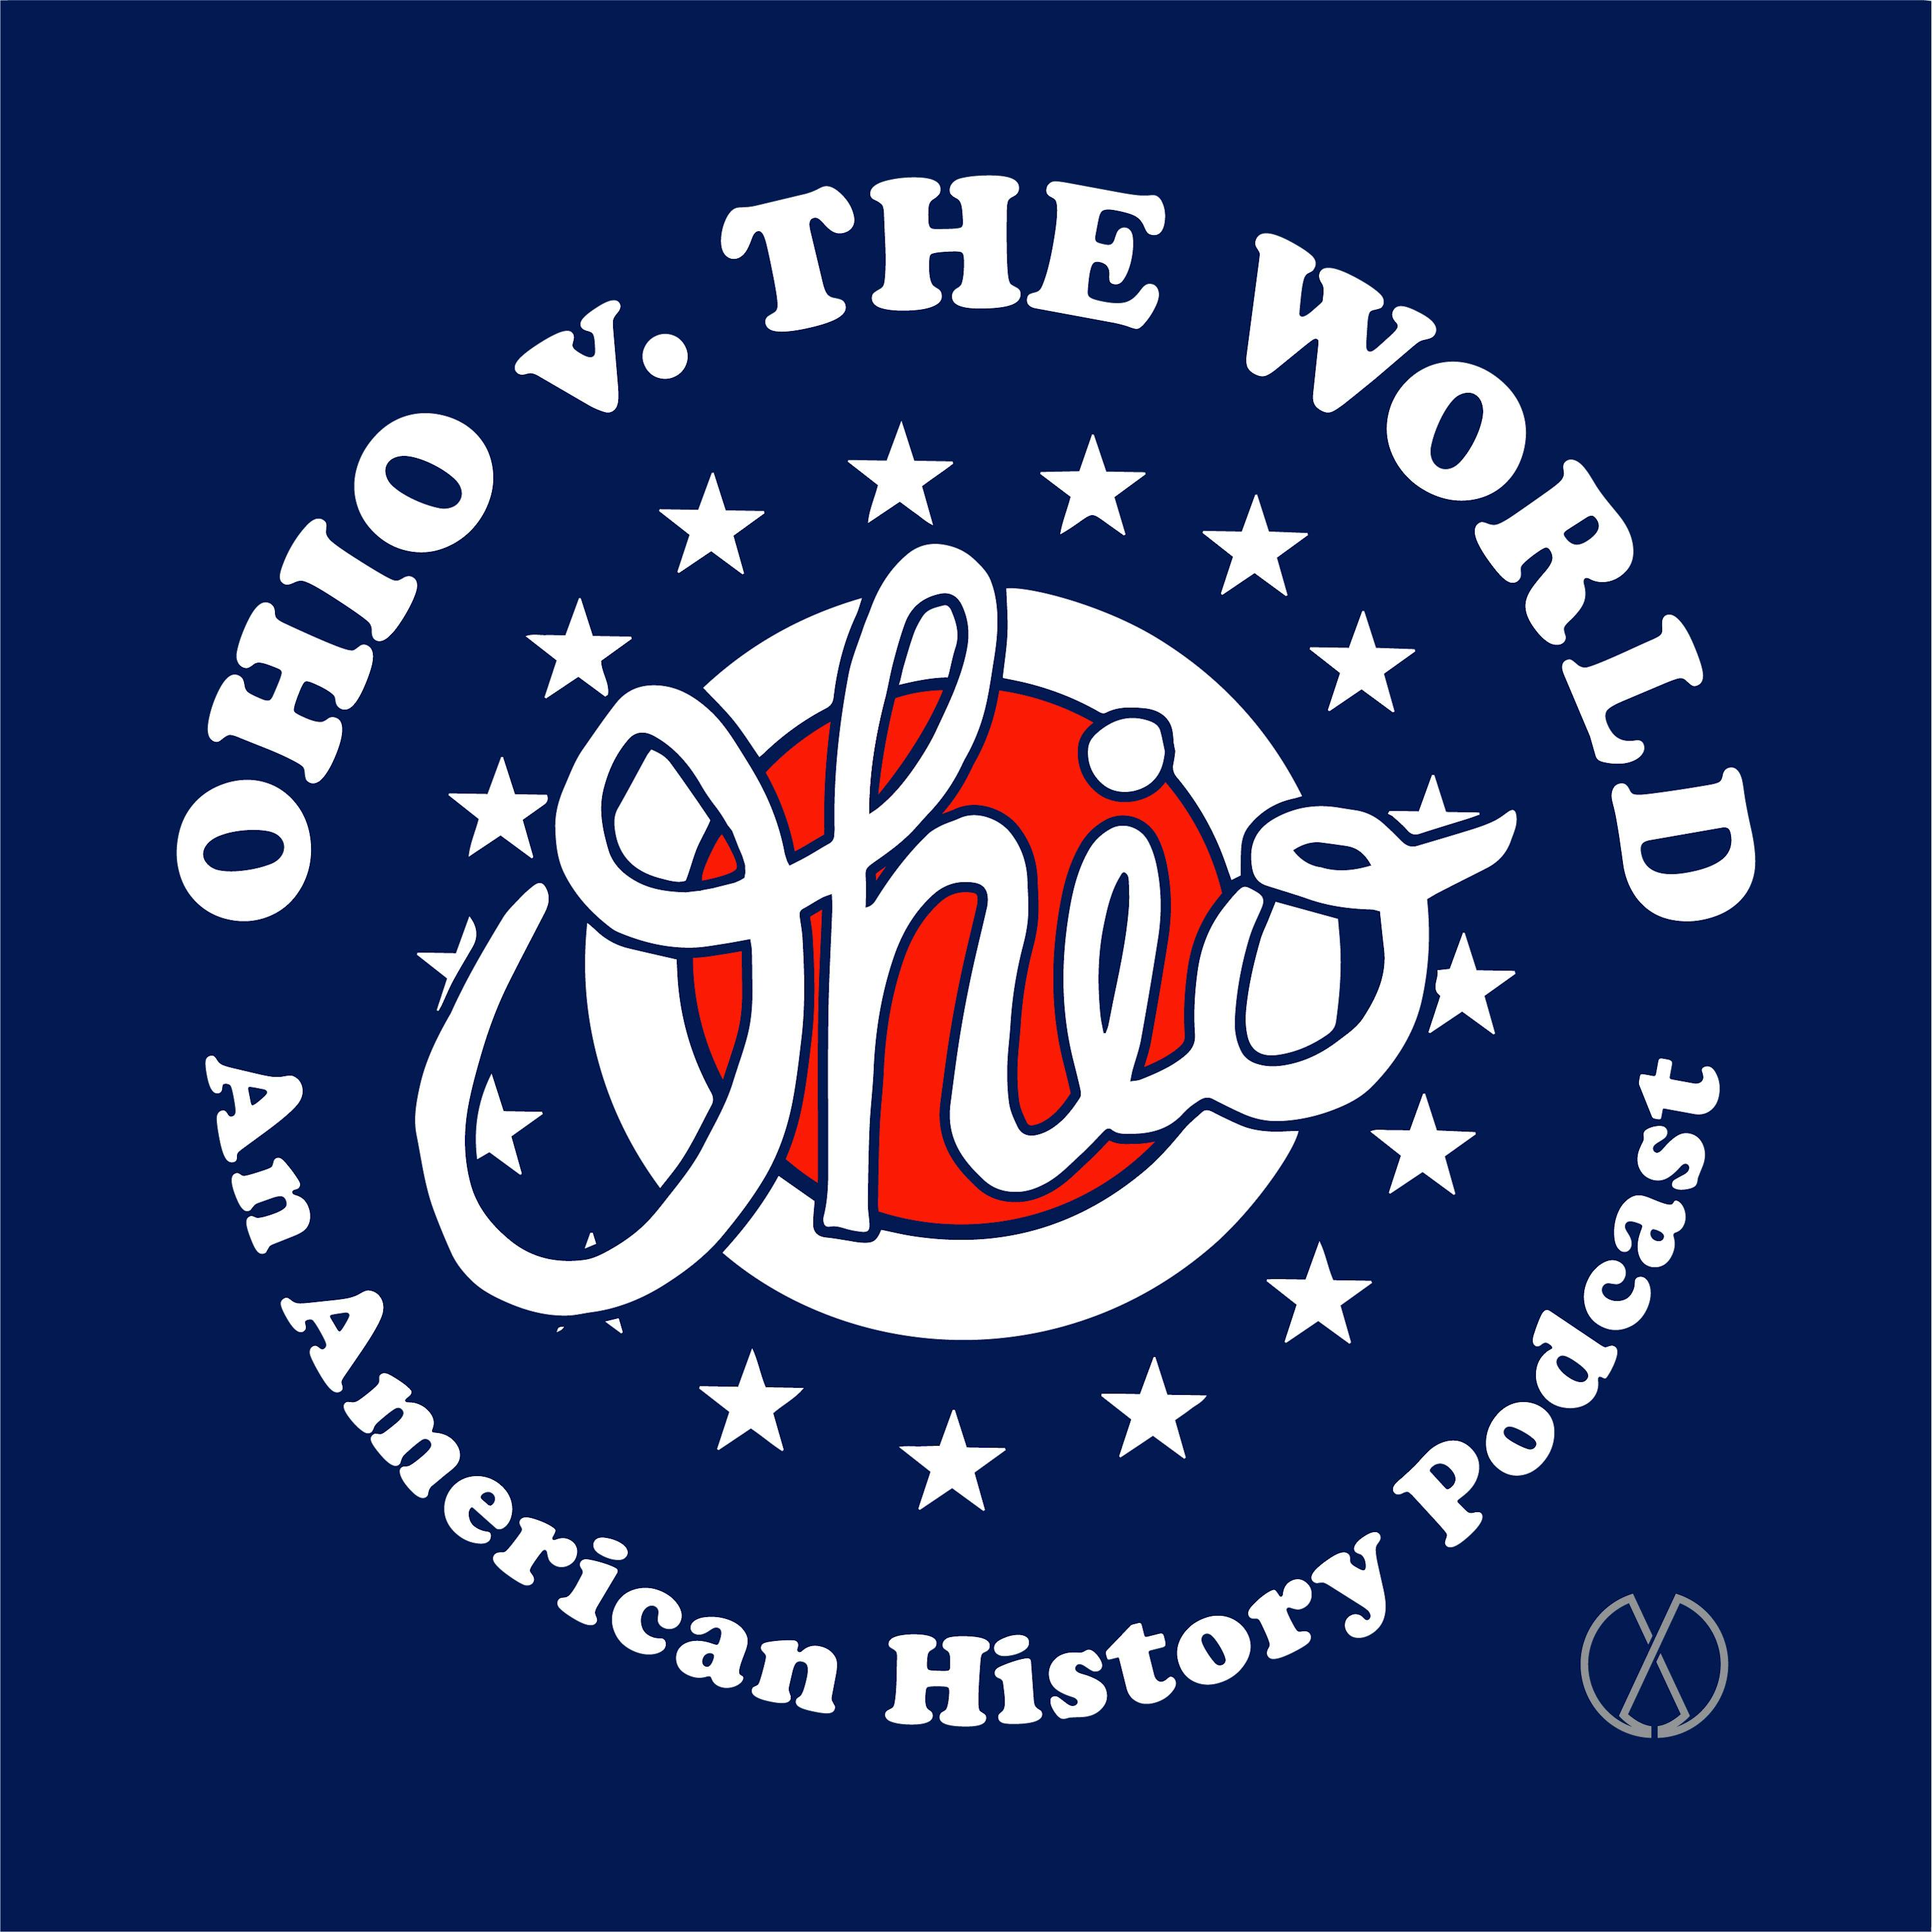 Ohio V. The World